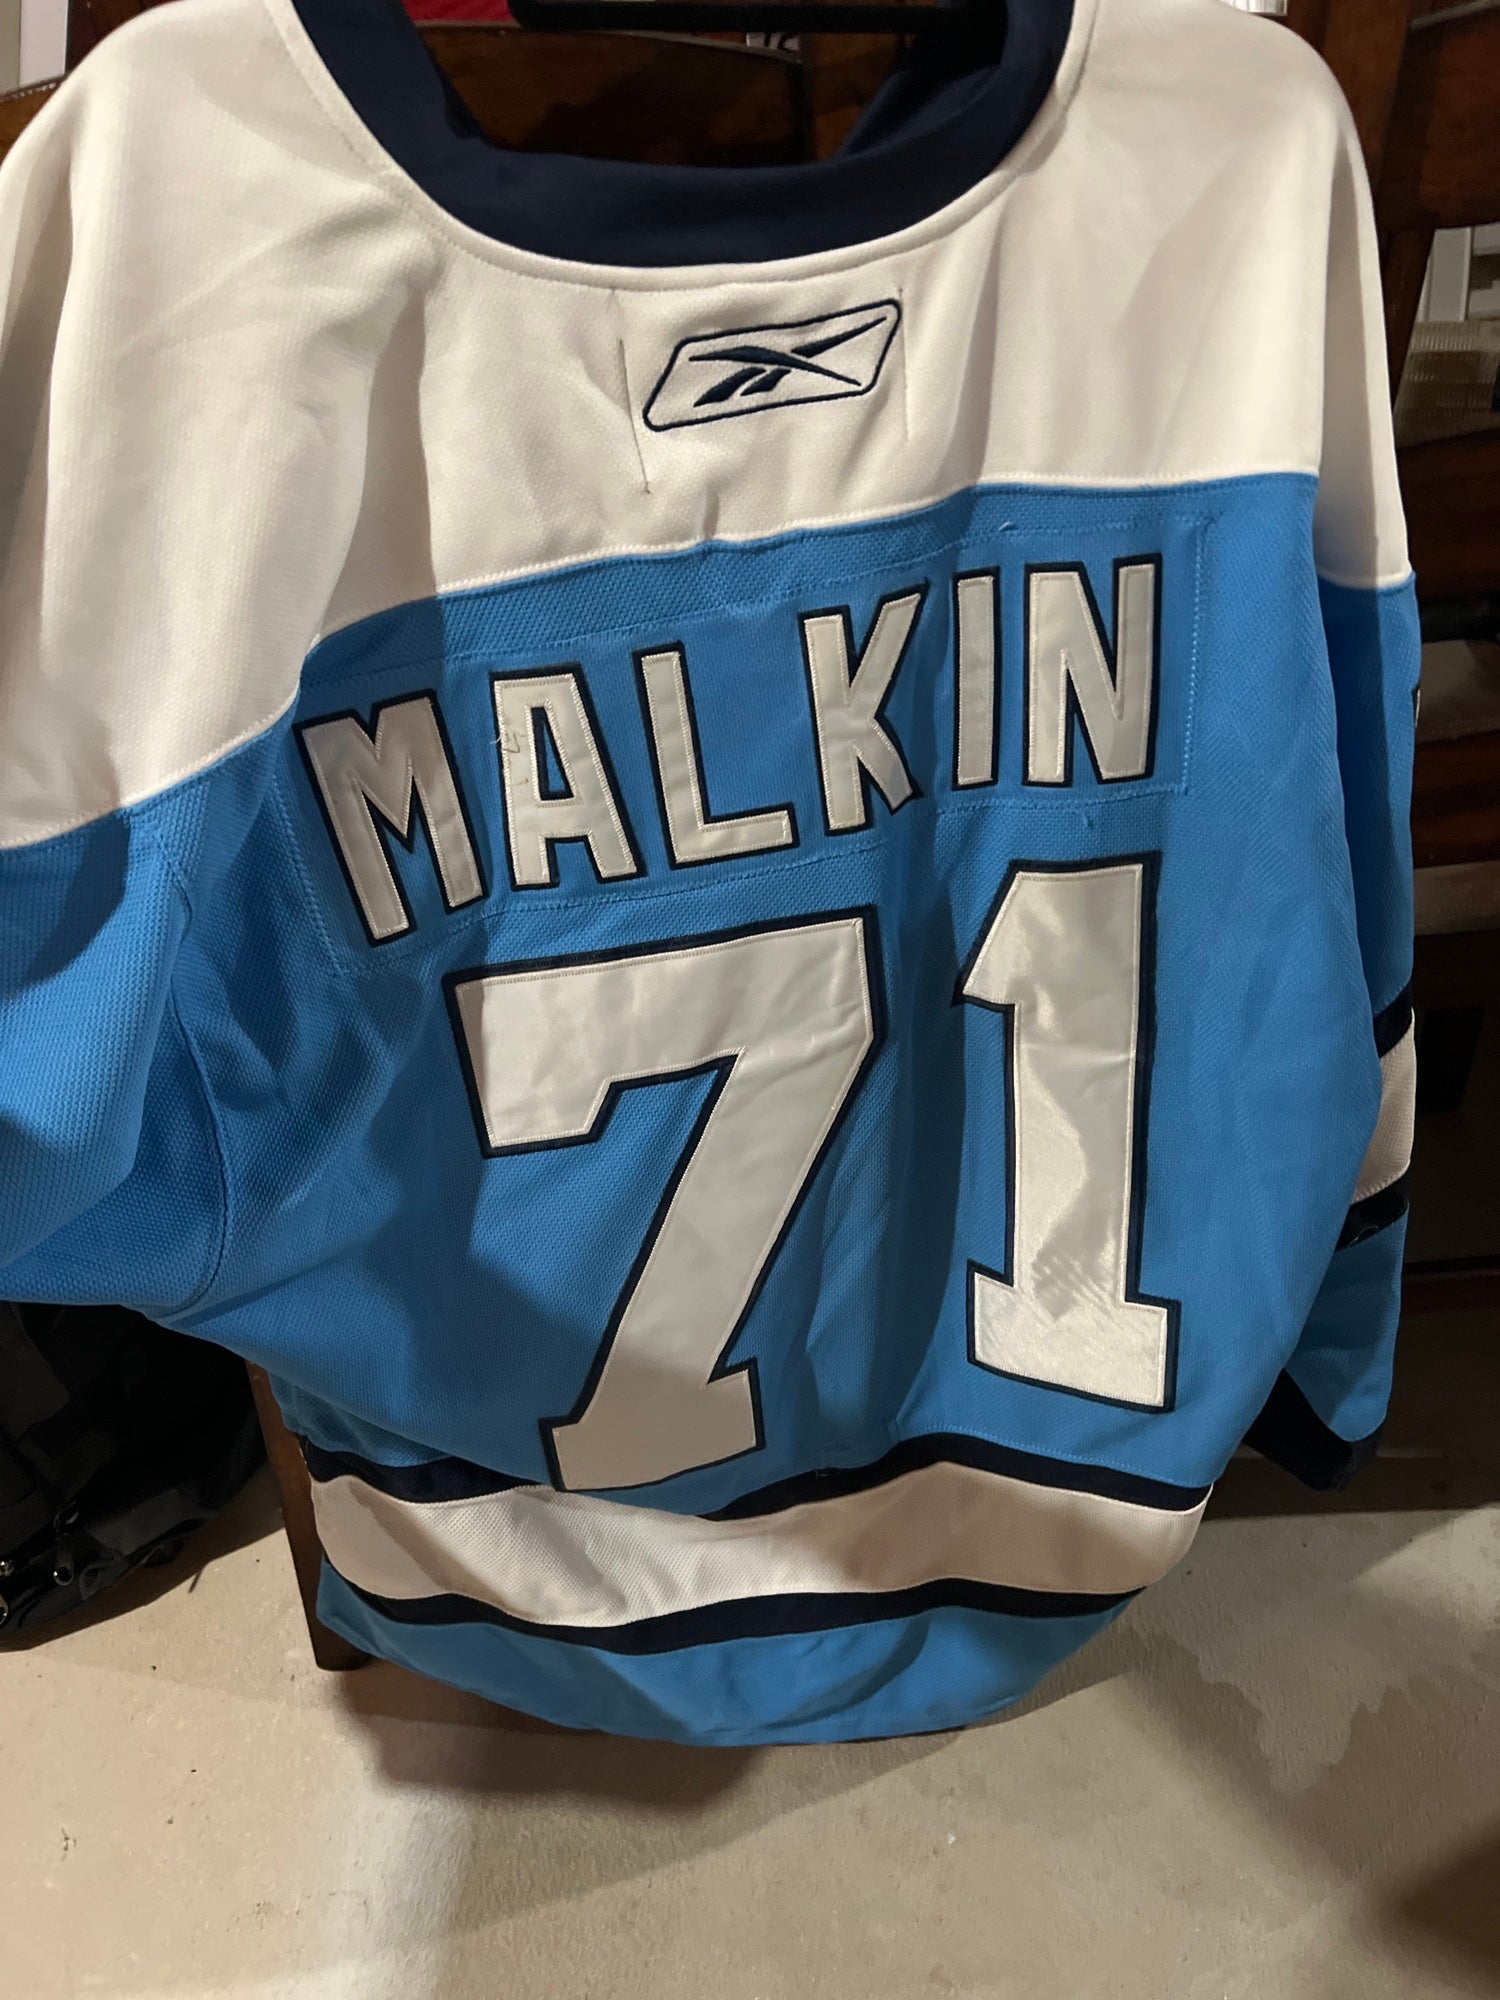 Evgeni Malkin Pittsburgh Penguins Signed 2008 Winter Classic